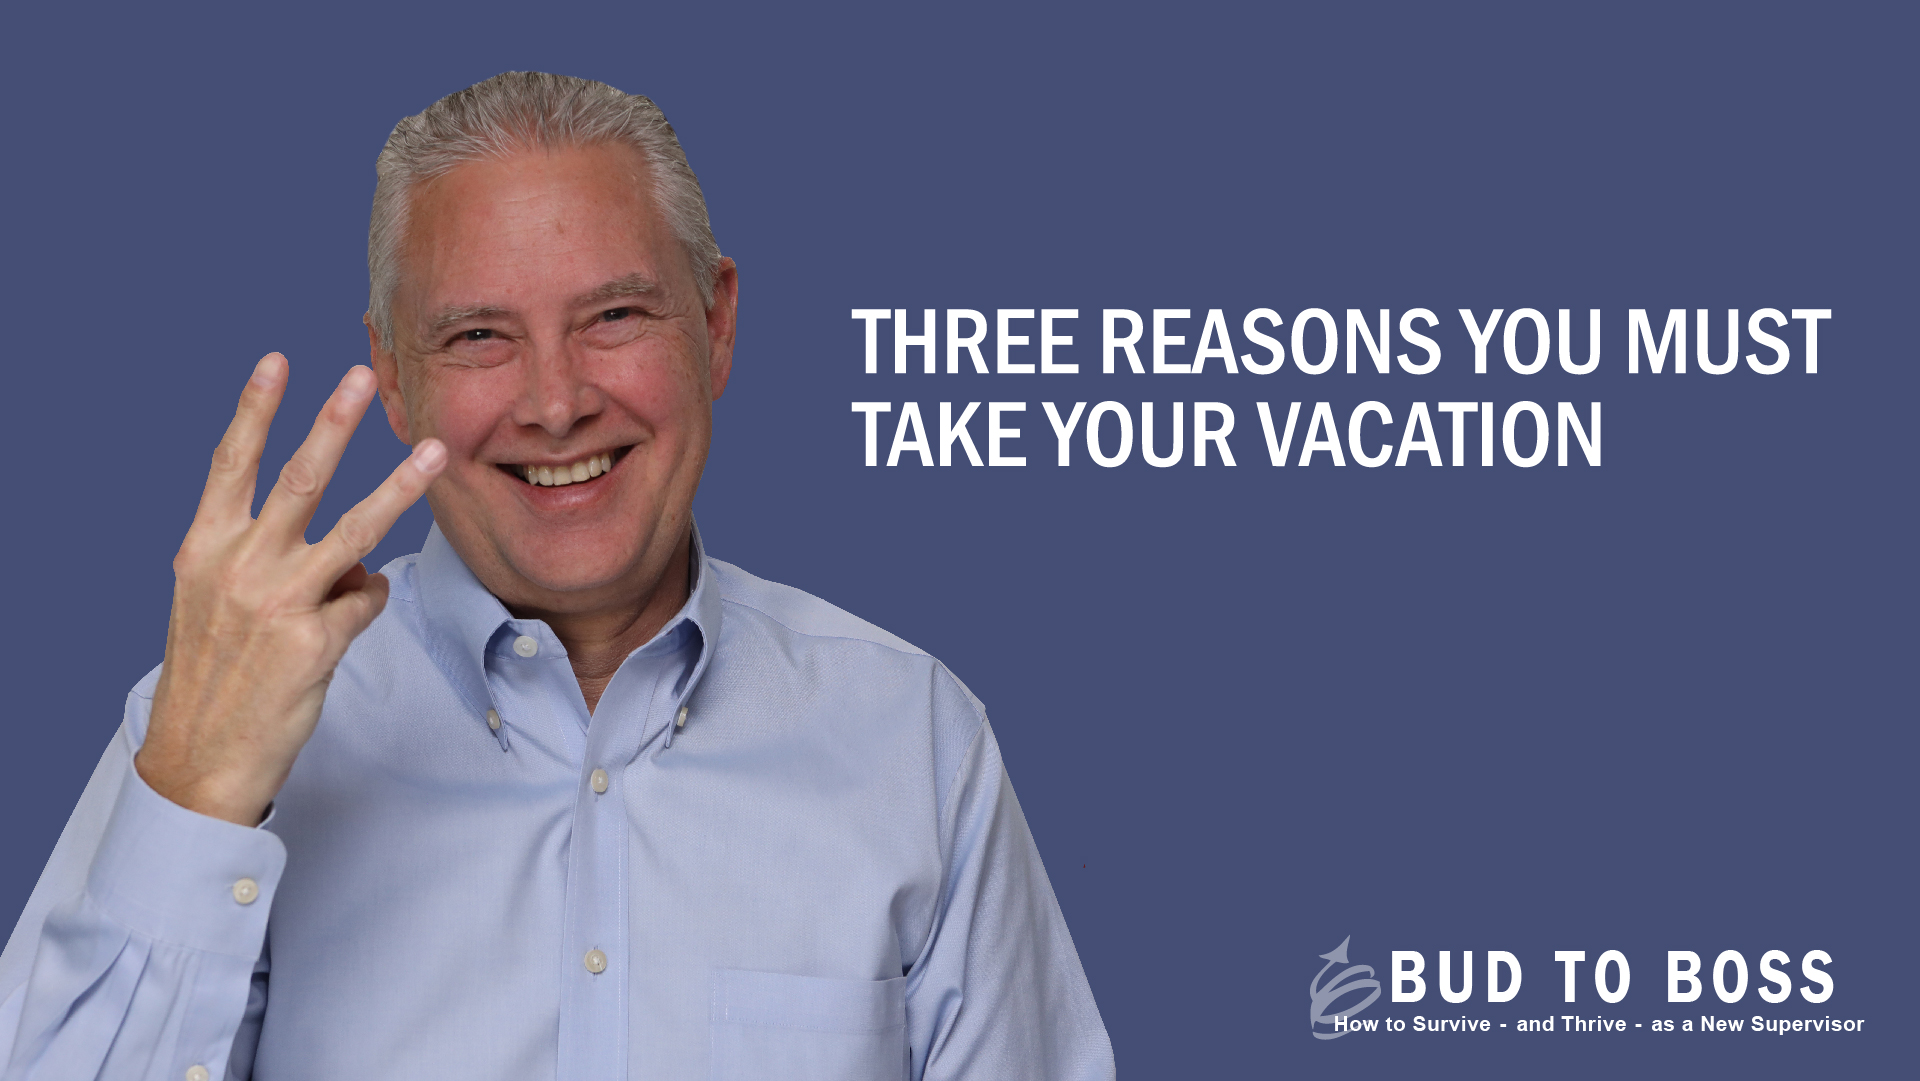 Reasons to take vacations